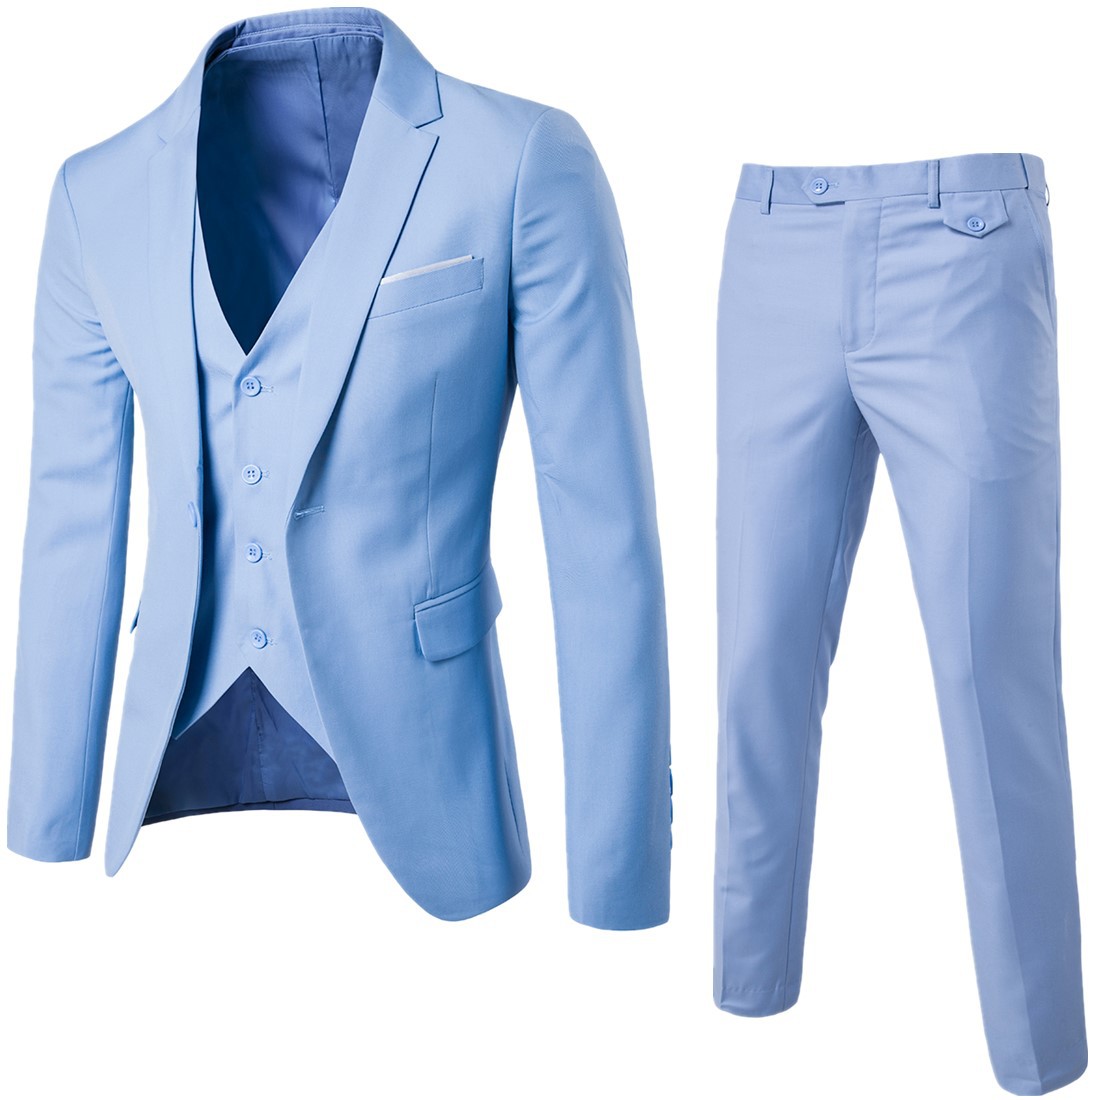 2019 men's autumn and winter new suit three piece suit